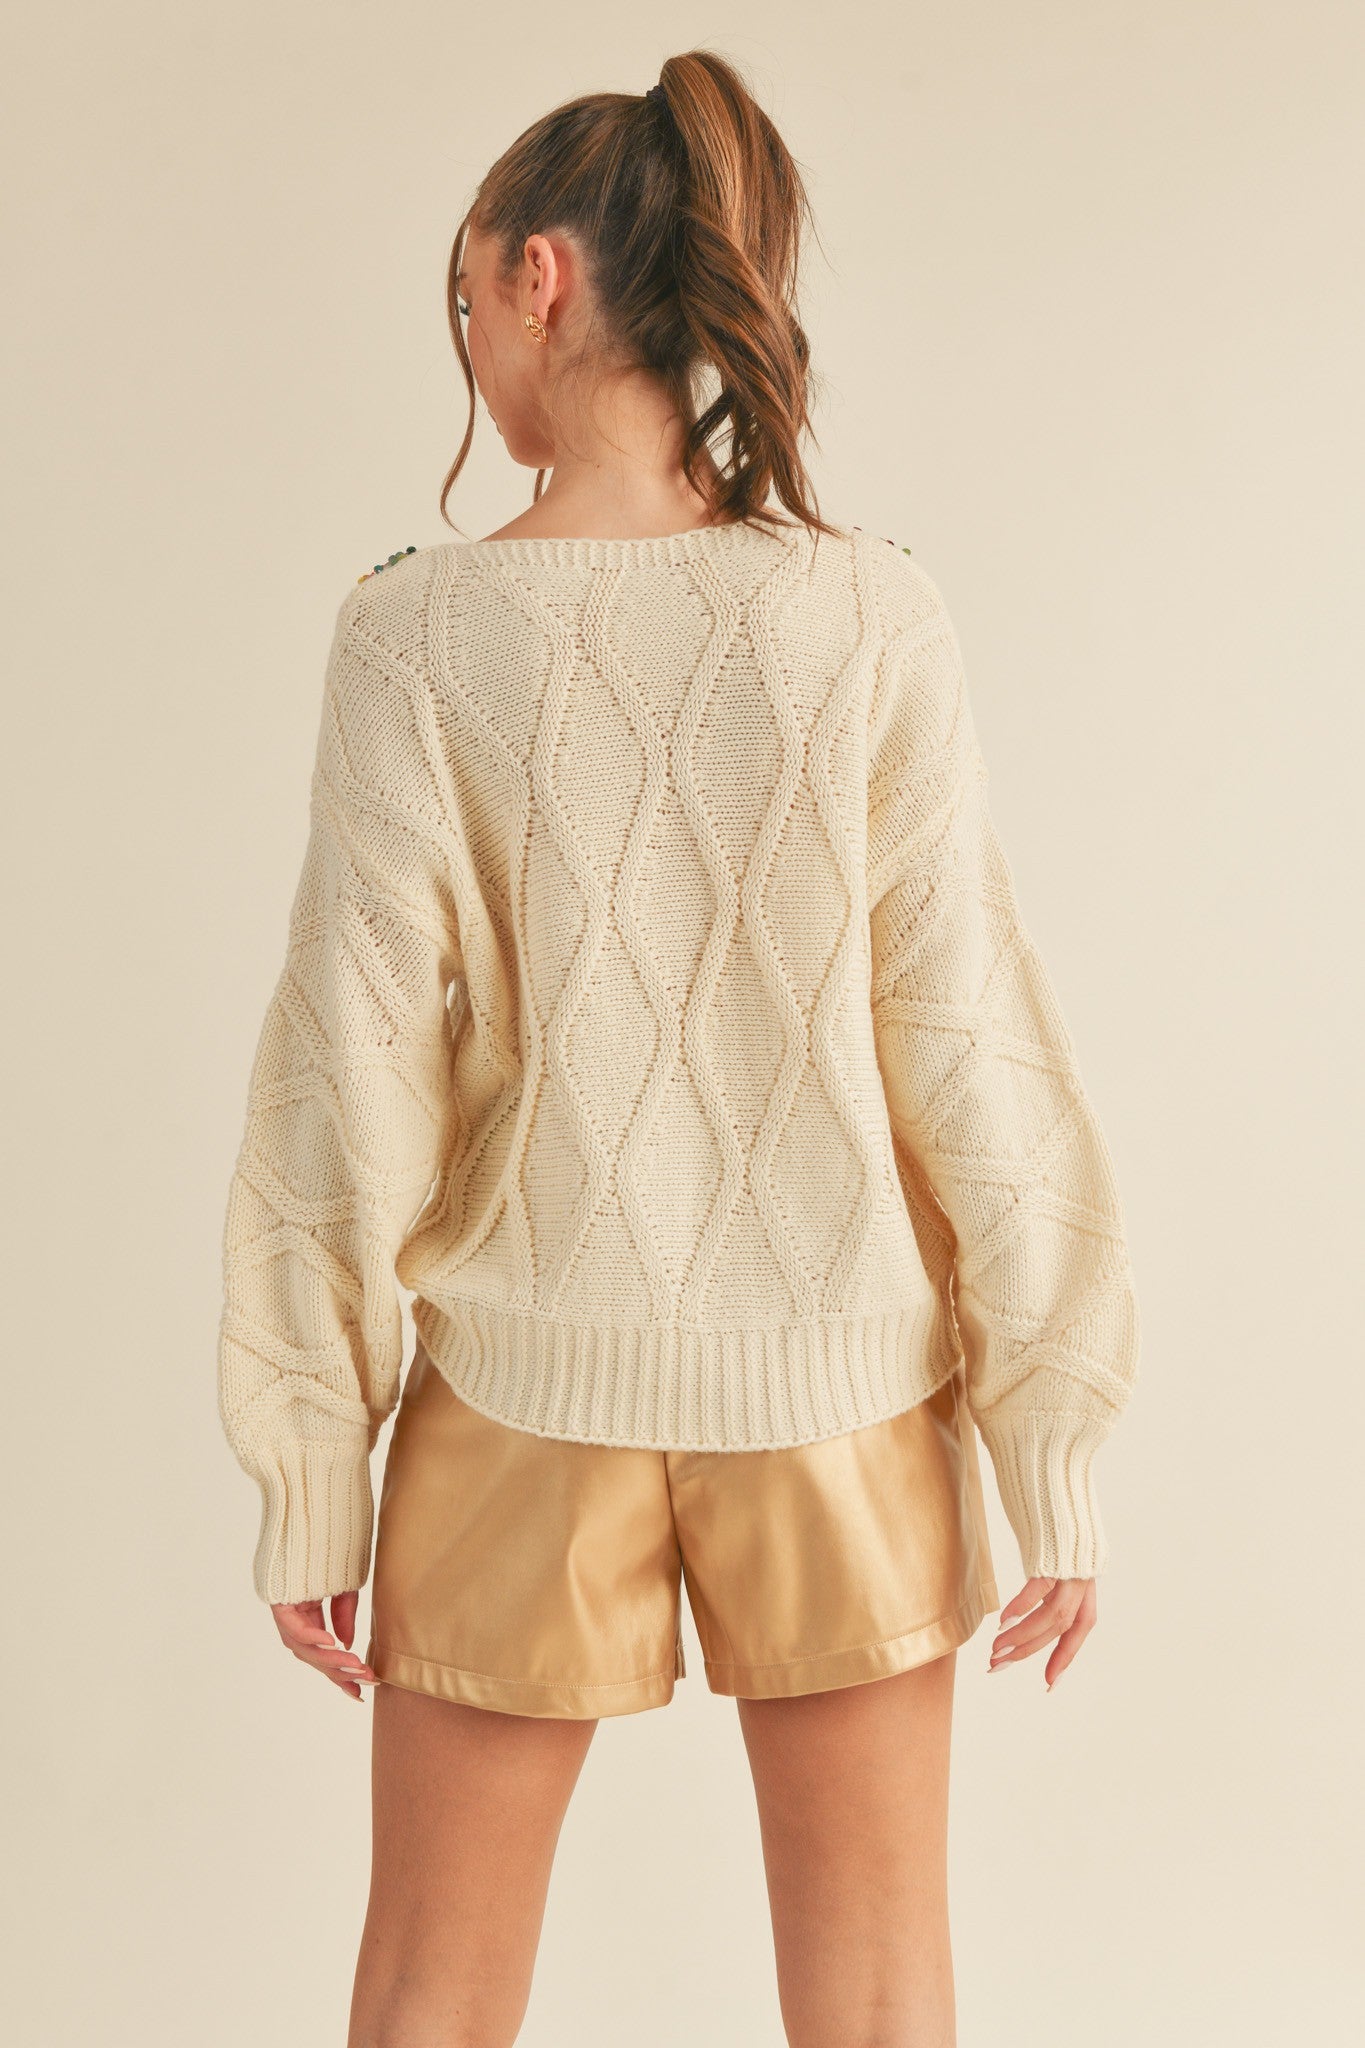 The Kristi Embellished Sweater